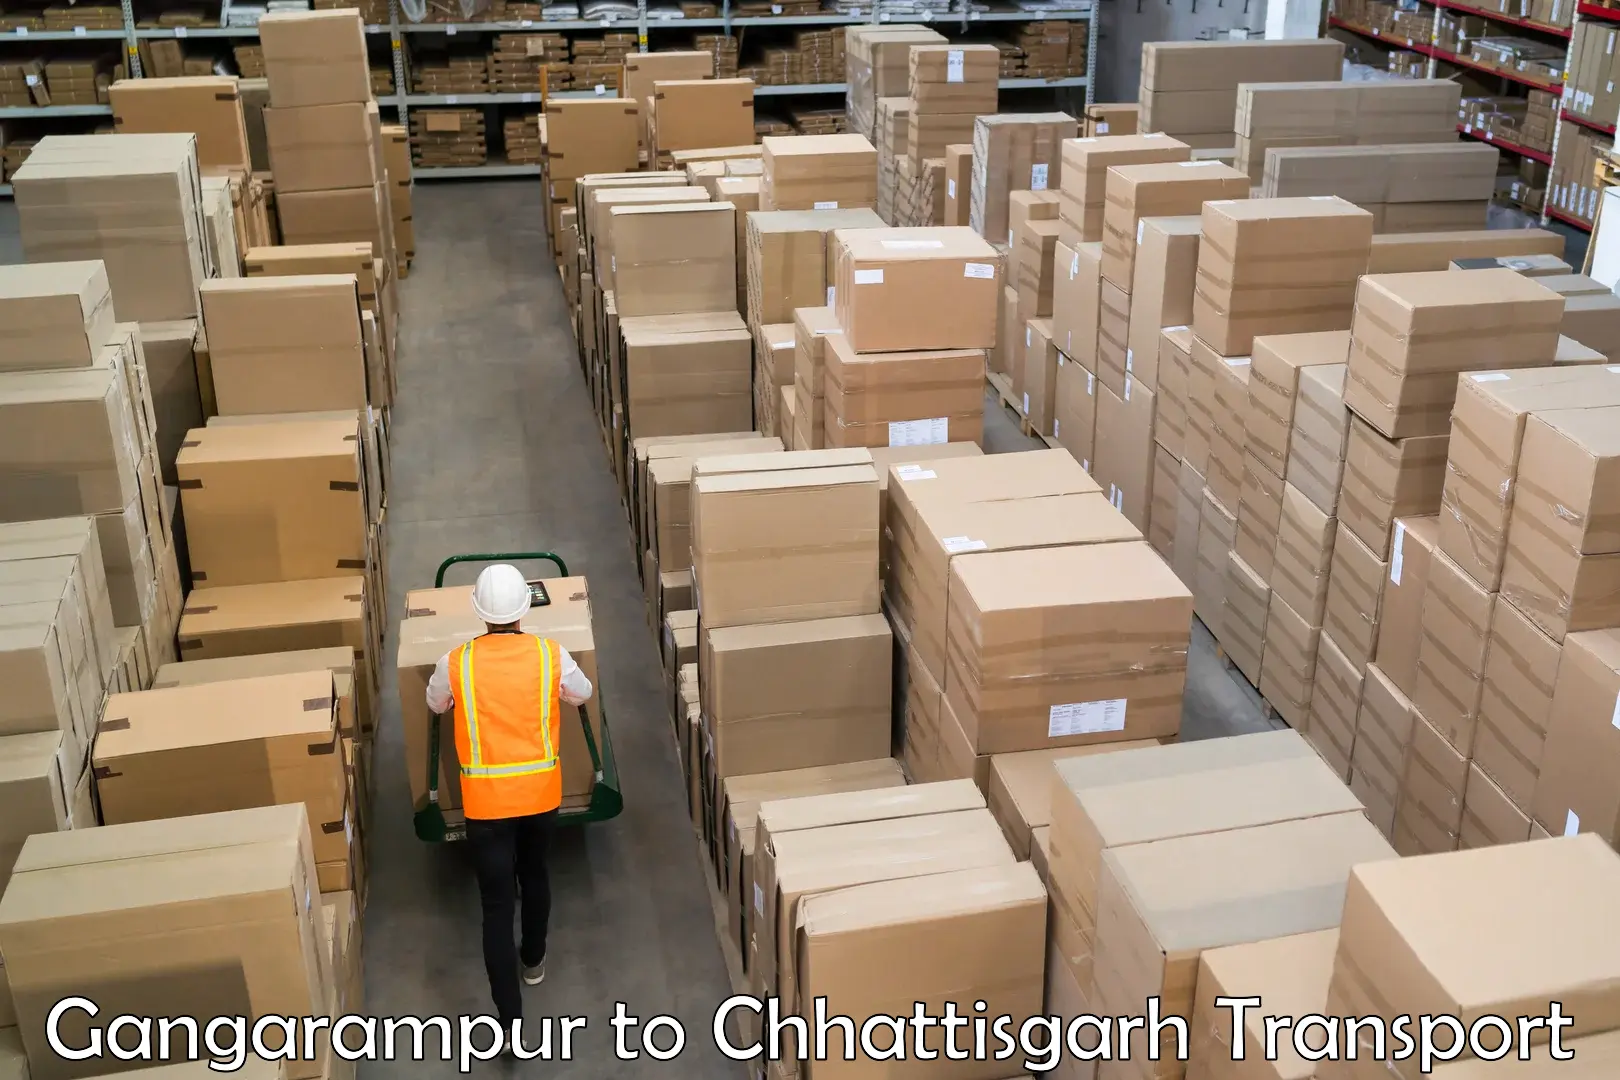 Container transport service Gangarampur to Raigarh Chhattisgarh